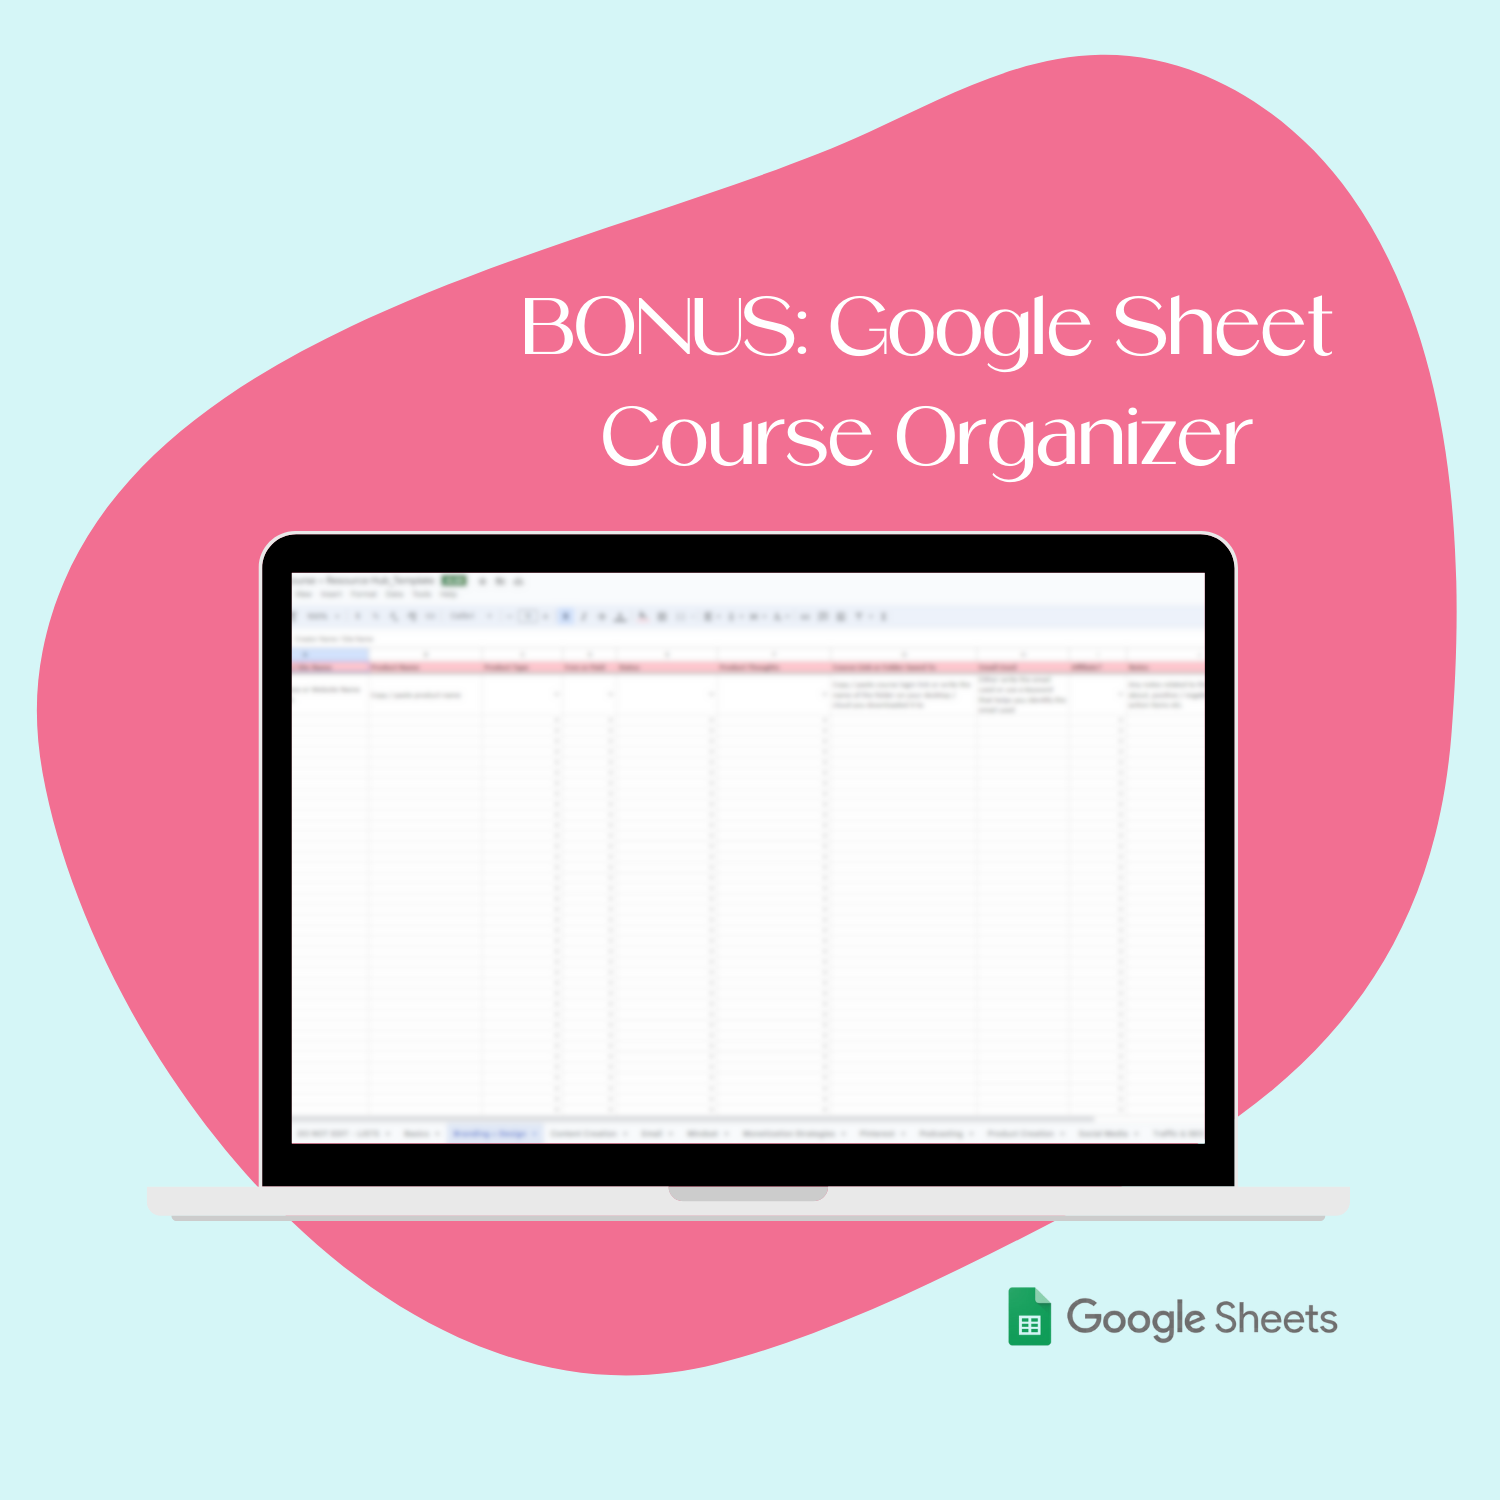 A laptop screen mockup displaying the bonus Google Sheet Course Organizer.